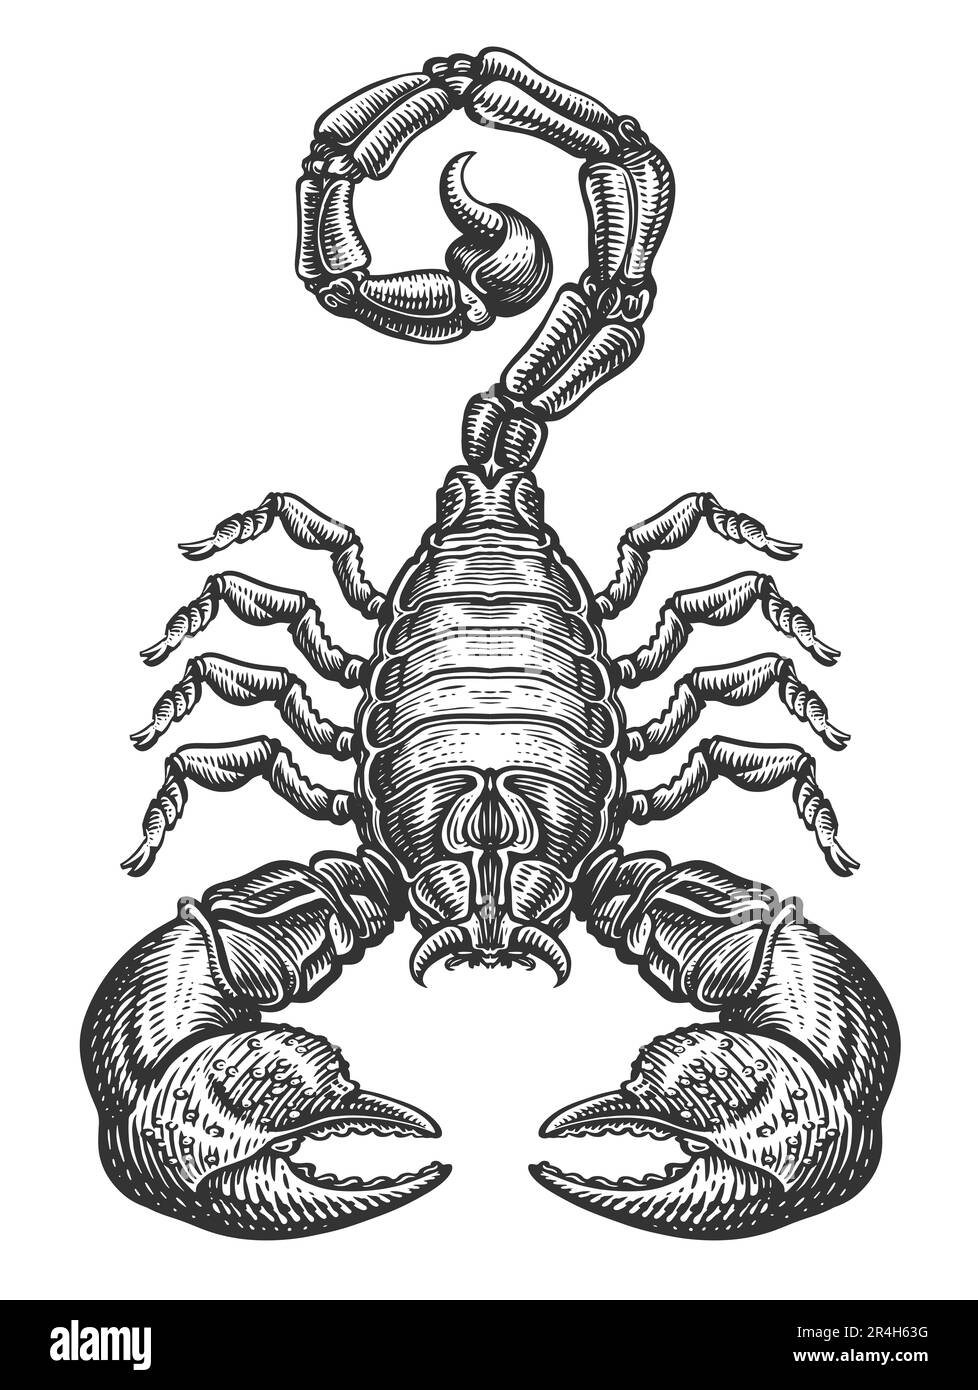 Black Scorpion isolated on white background. Predatory arachnid animal. Hand drawn sketch illustration Stock Photo